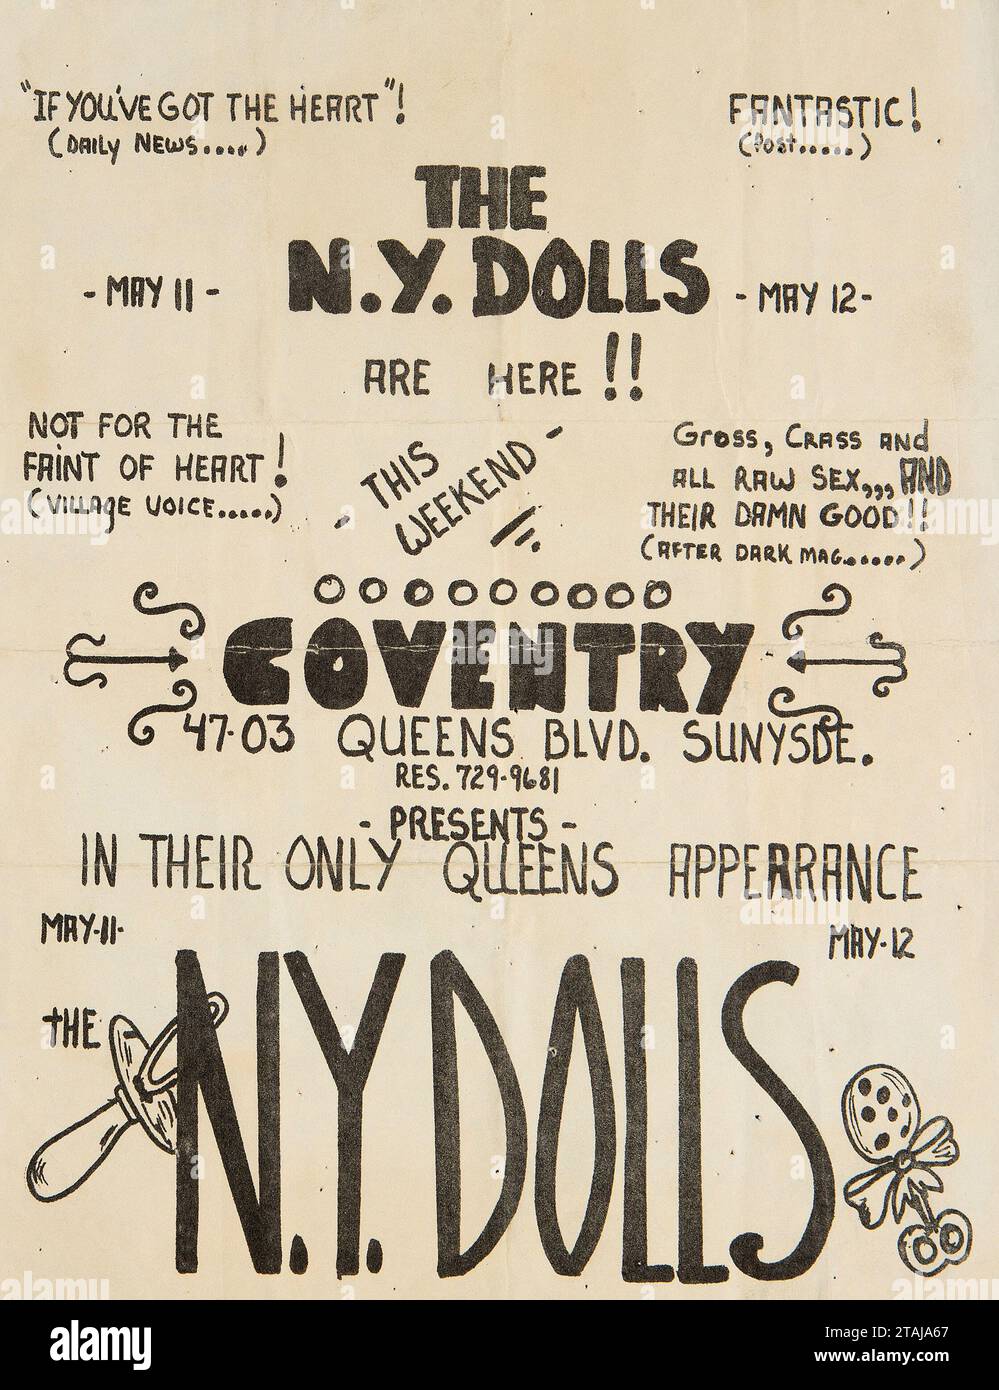 New York Dolls 1973 - Coventry Club Queens, New York - Concert Handbill - flyer Stock Photo